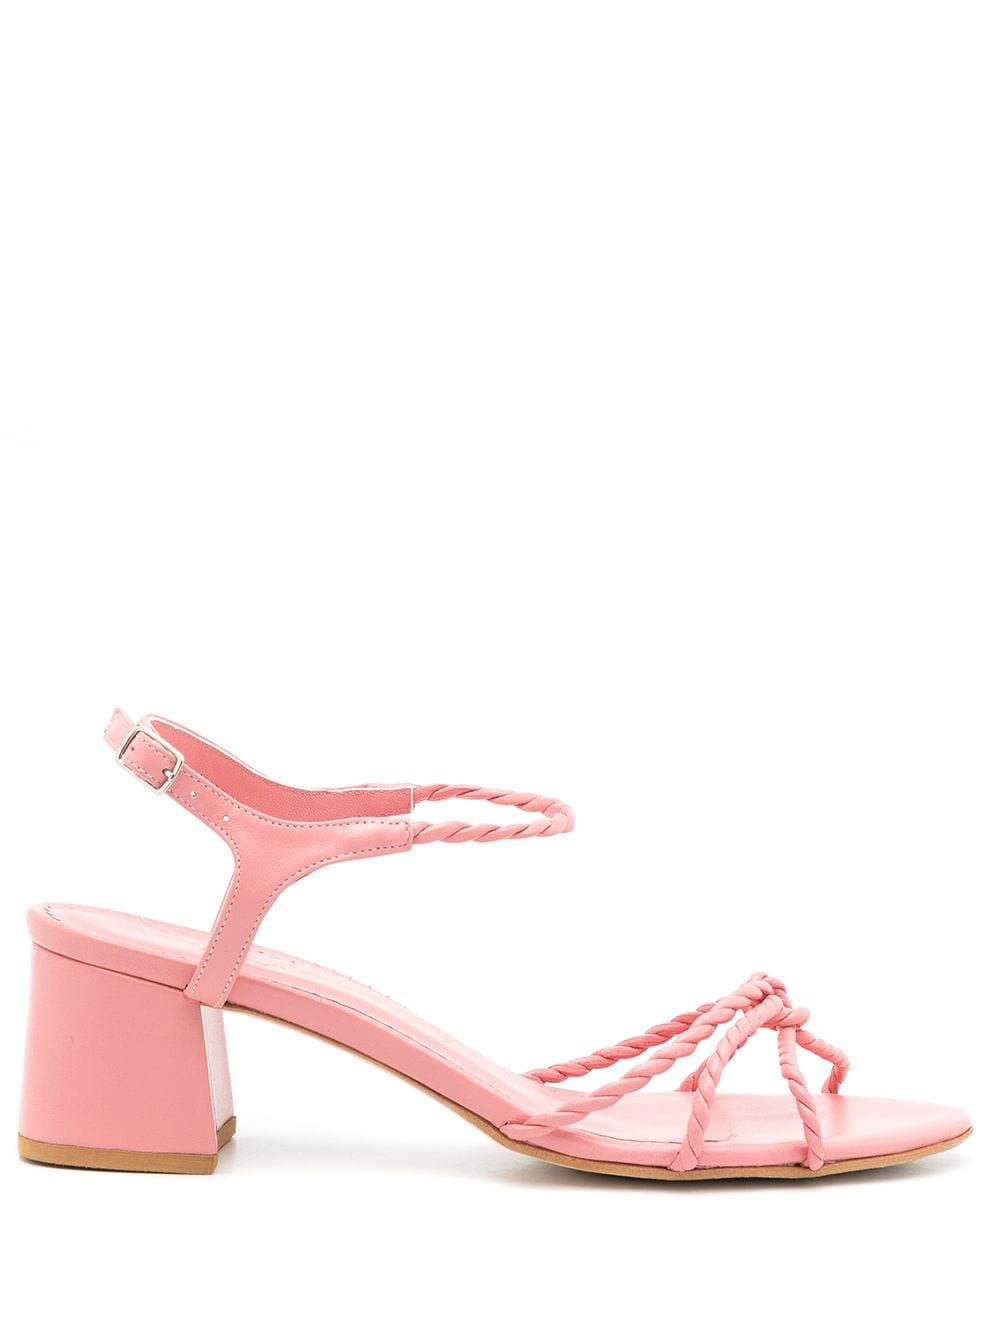 Sarah Chofakian leather Julie sandals - Pink von Sarah Chofakian